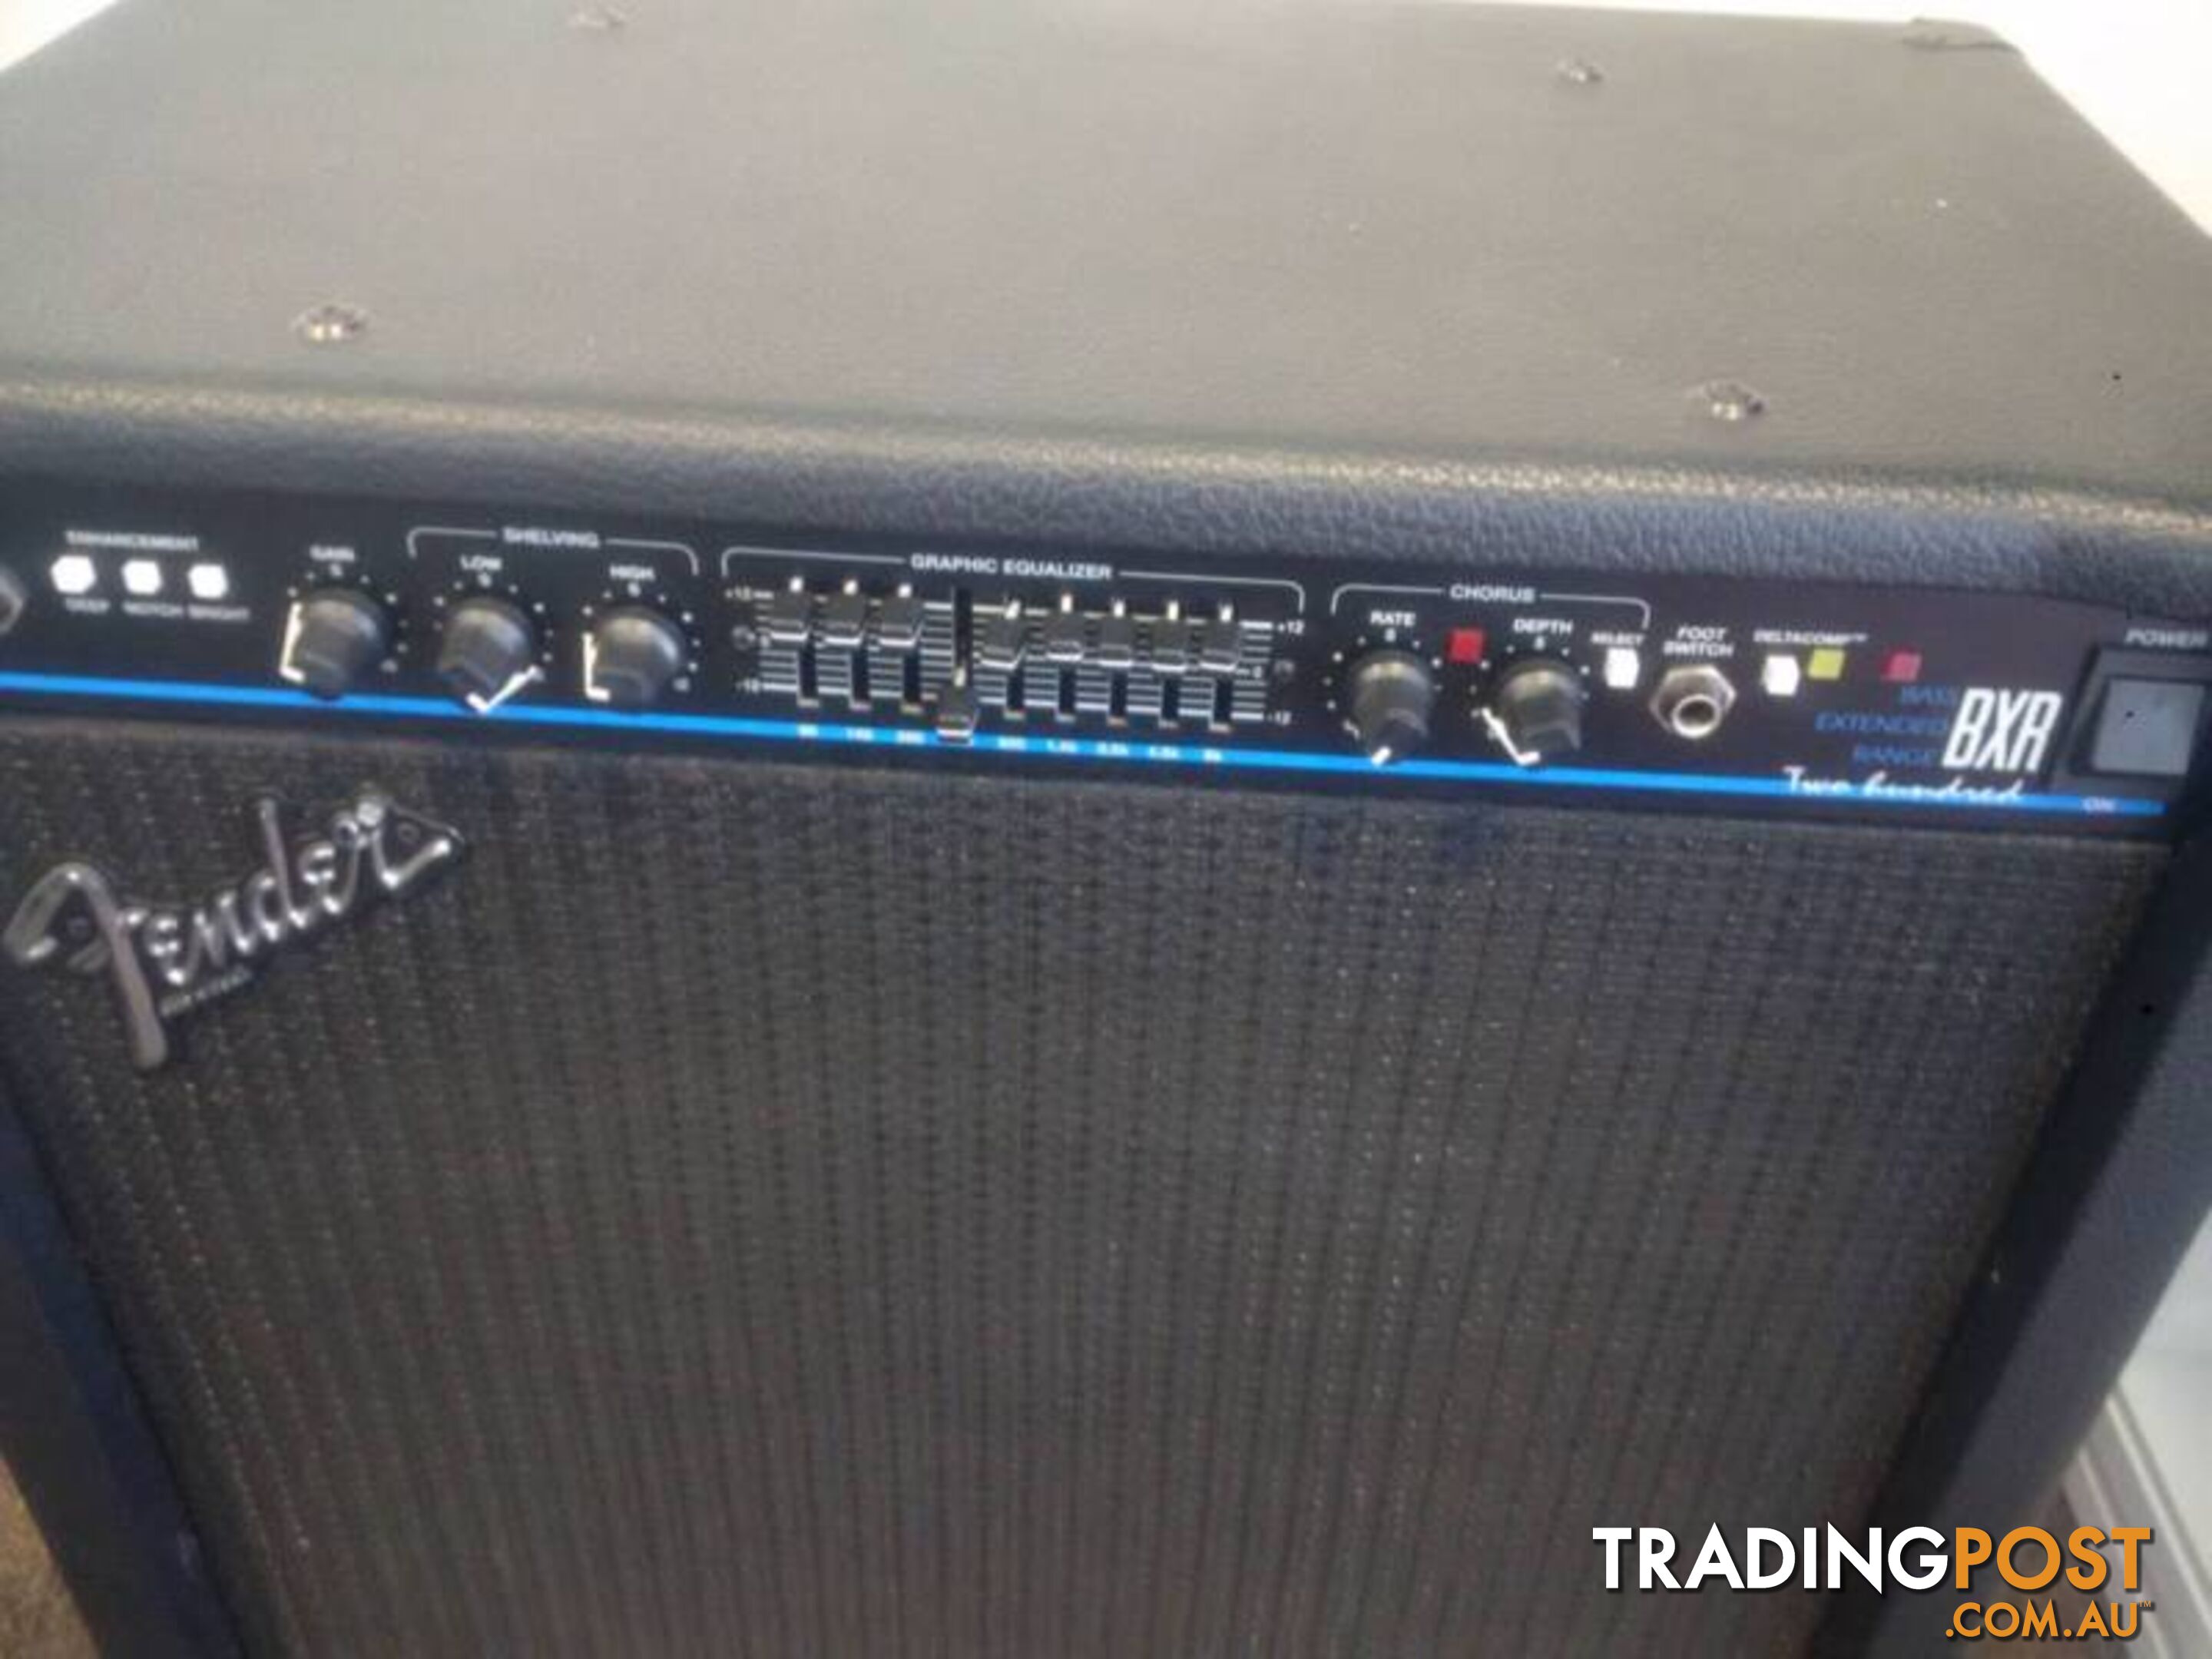 Fender Bass Amp, BXR-200, USA $750. Acoustic Guitar $60